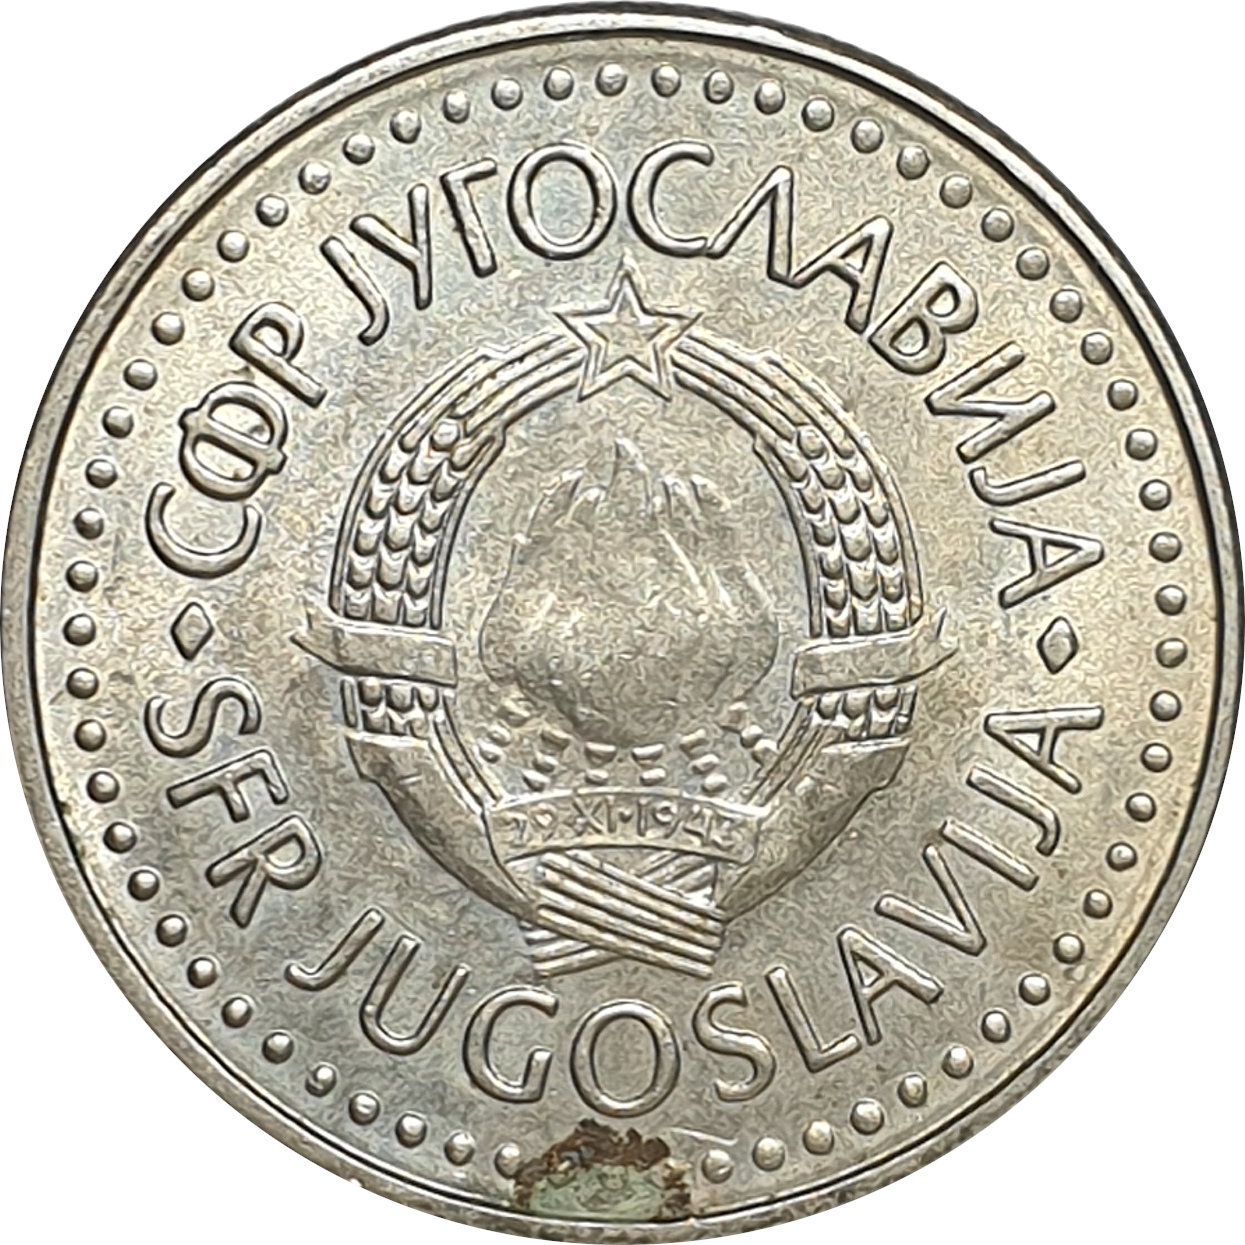 50 dinara - Emblem - 1985 issue